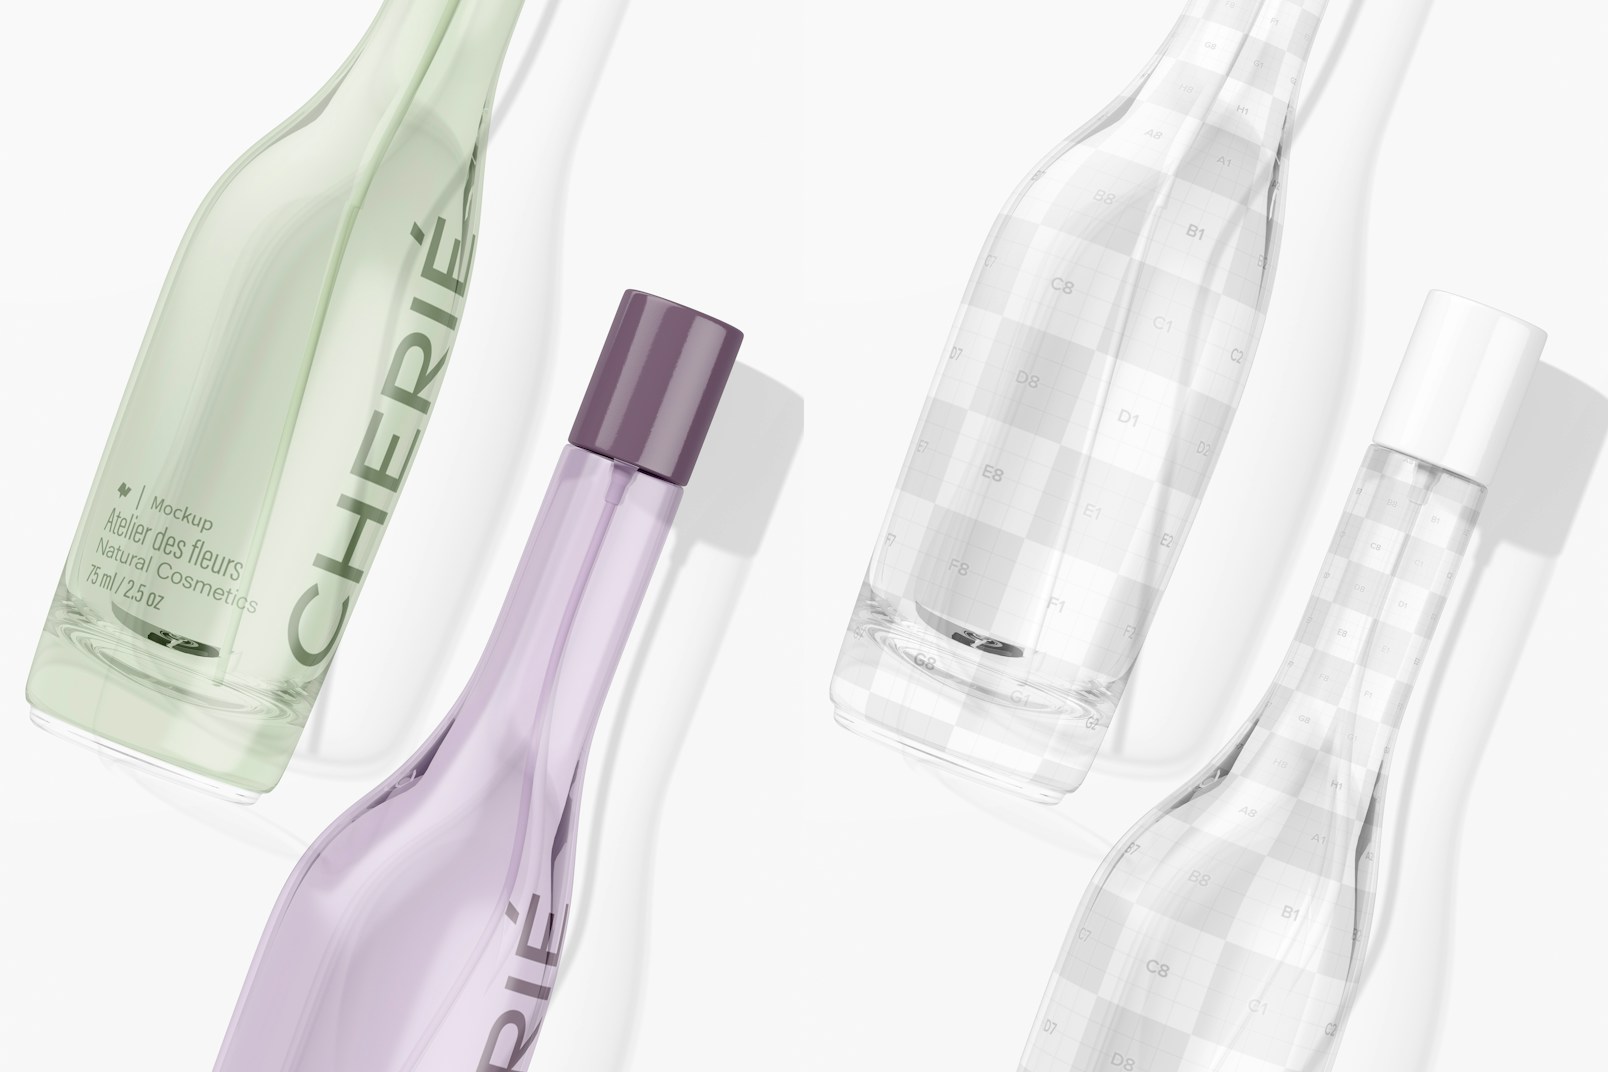 Asymmetrical Perfume Bottles Mockup, Close Up